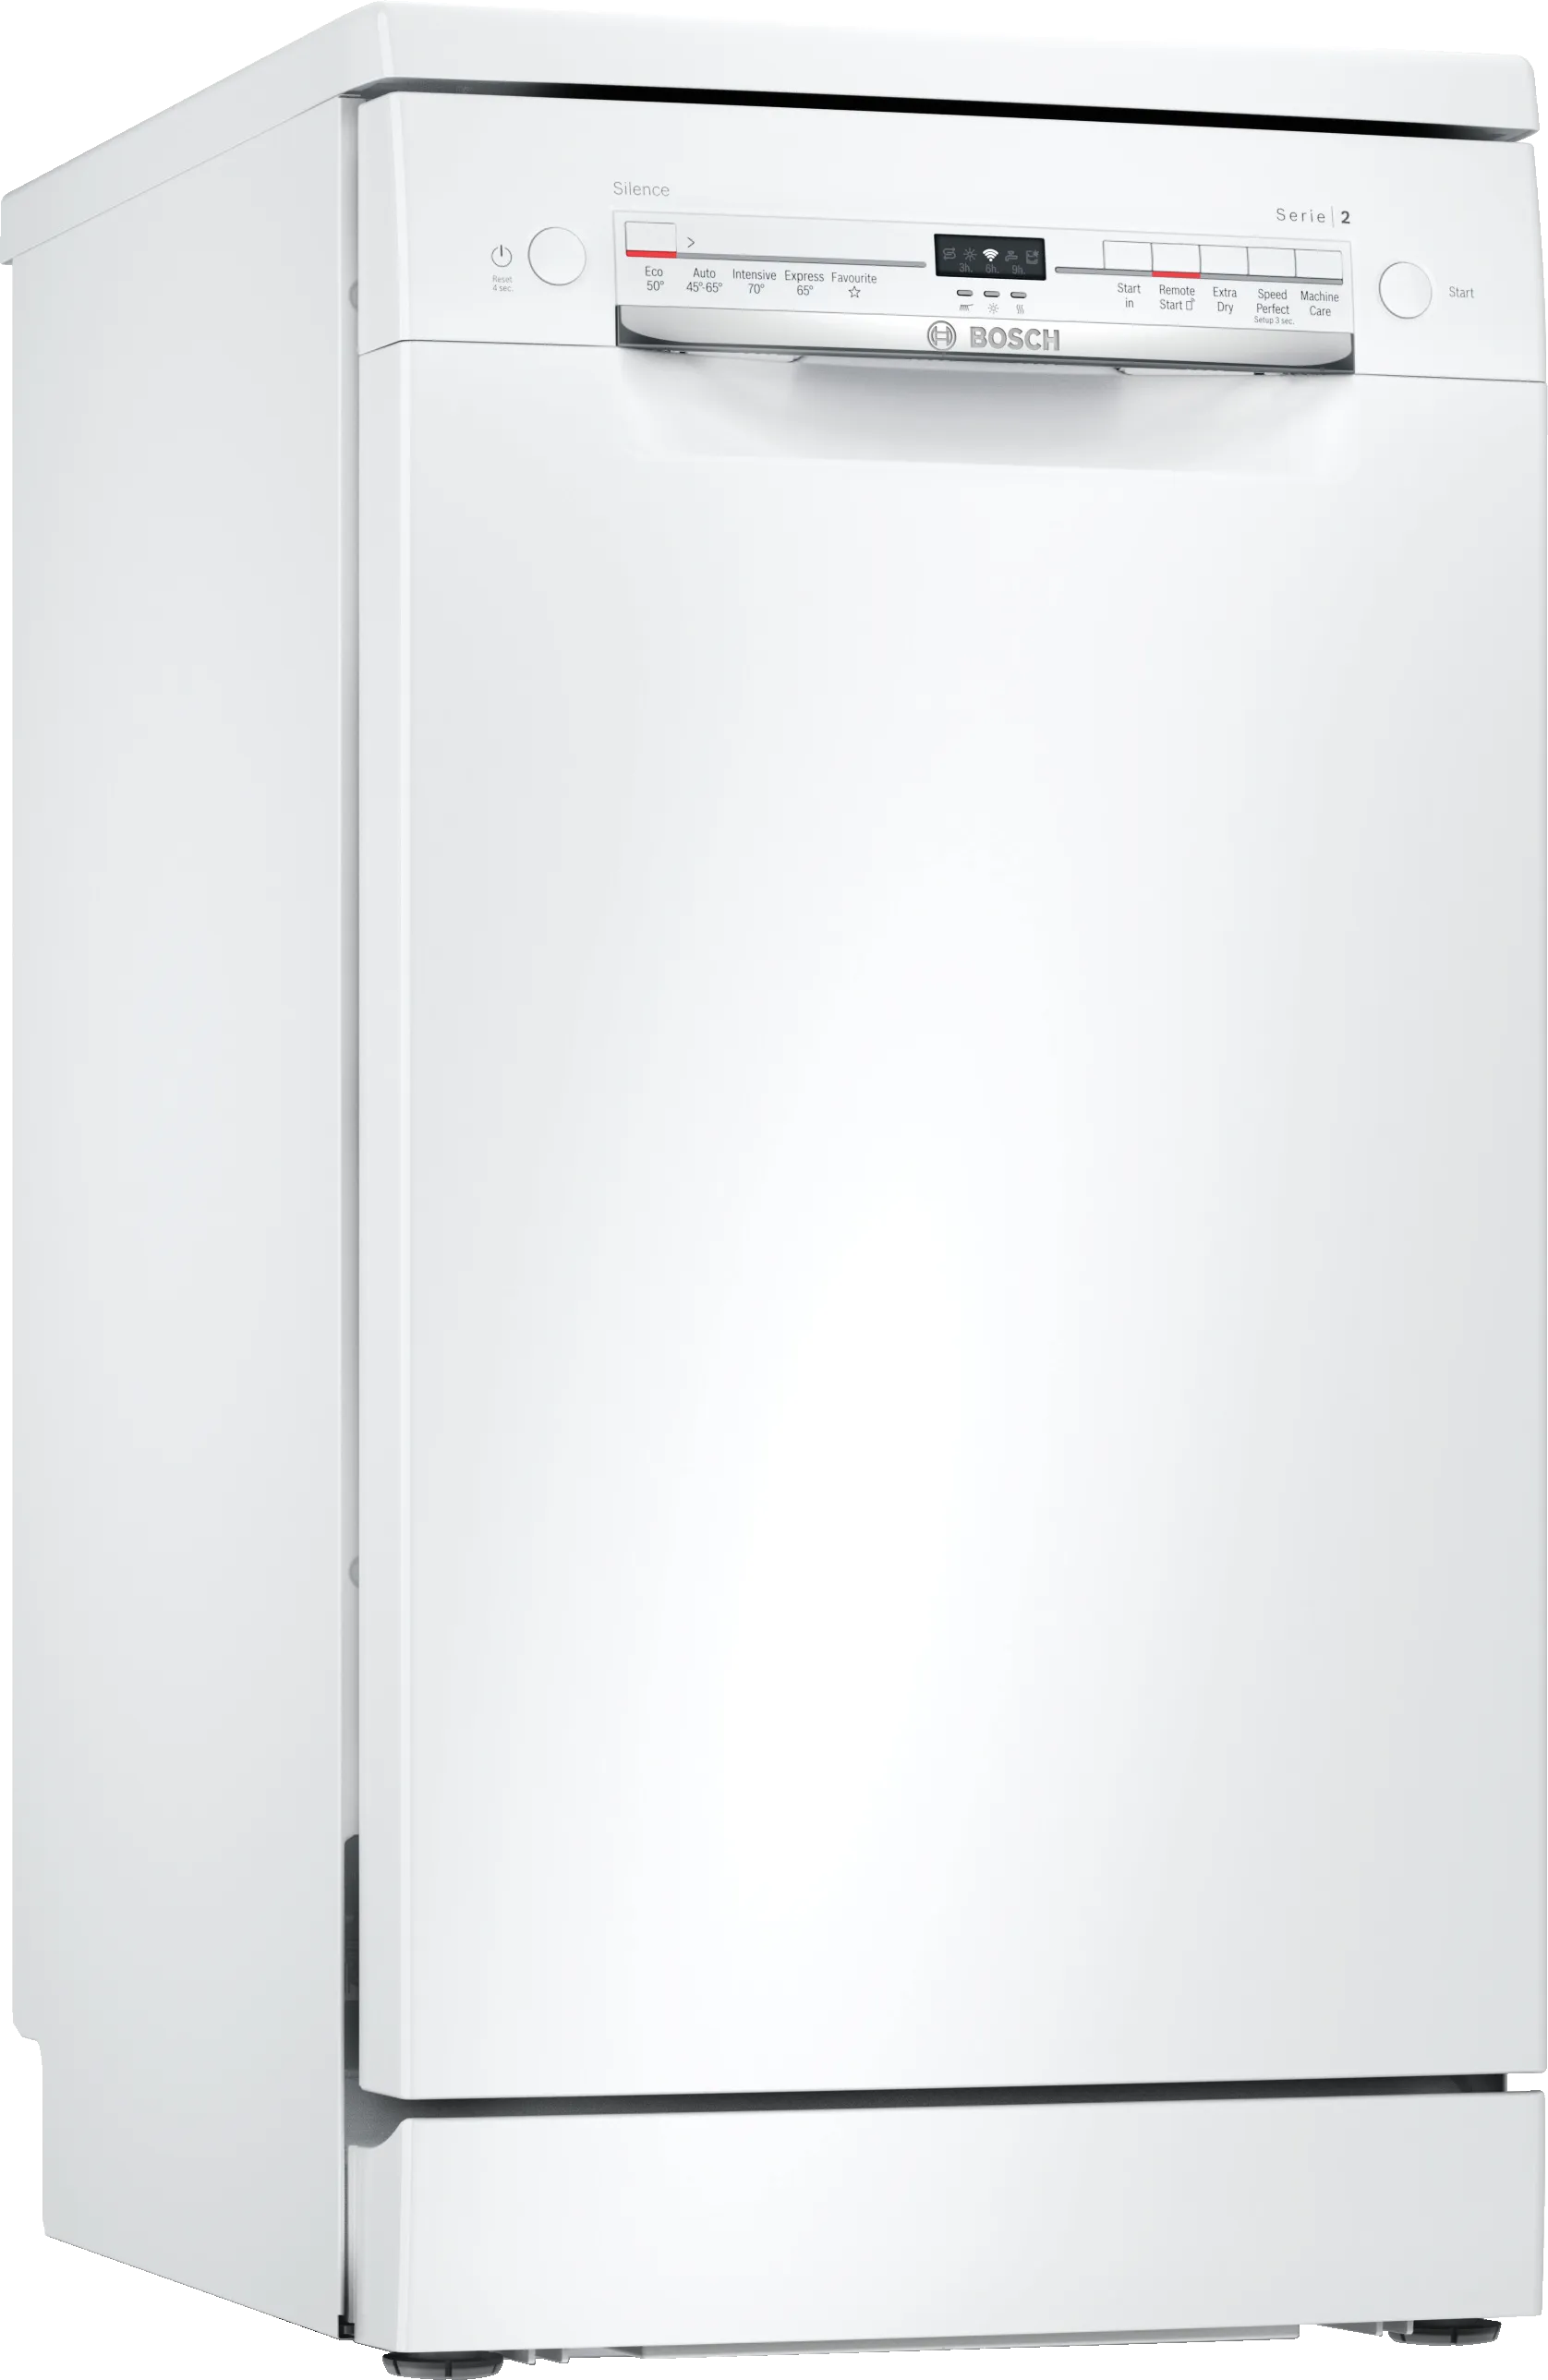 Series 2 free-standing dishwasher 45 cm White 